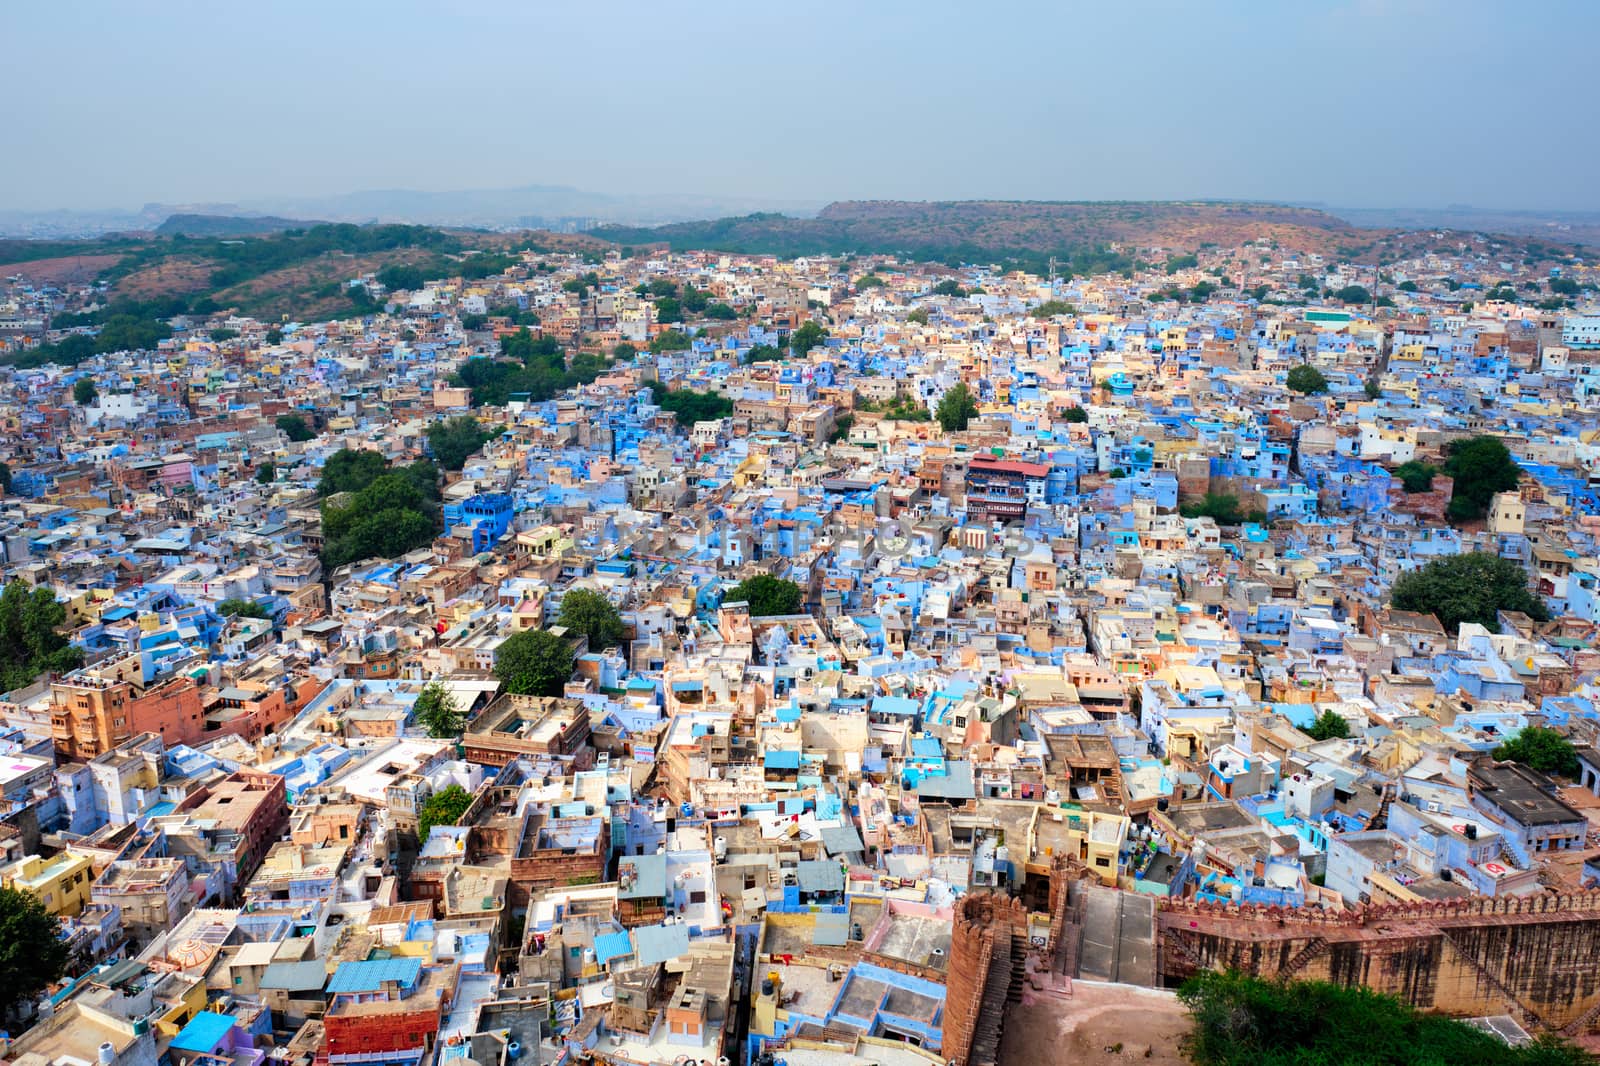 Aerial view of Jodhpur Blue City. Jodphur, Rajasthan, India by dimol